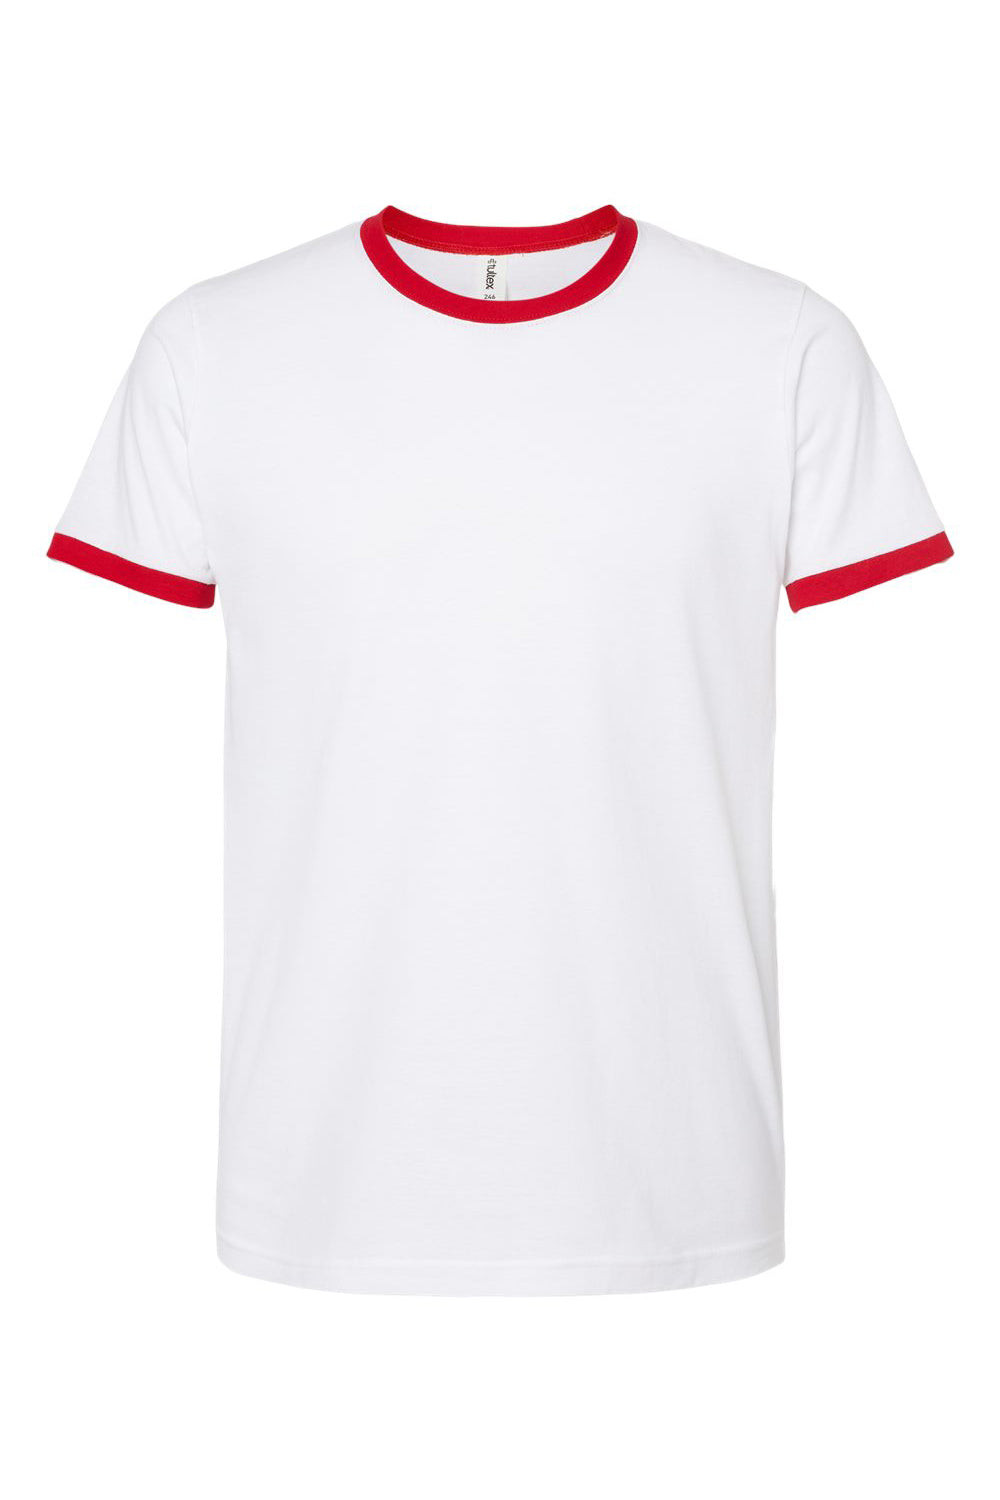 Tultex 246 Mens Fine Jersey Ringer Short Sleeve Crewneck T-Shirt White/Red Flat Front